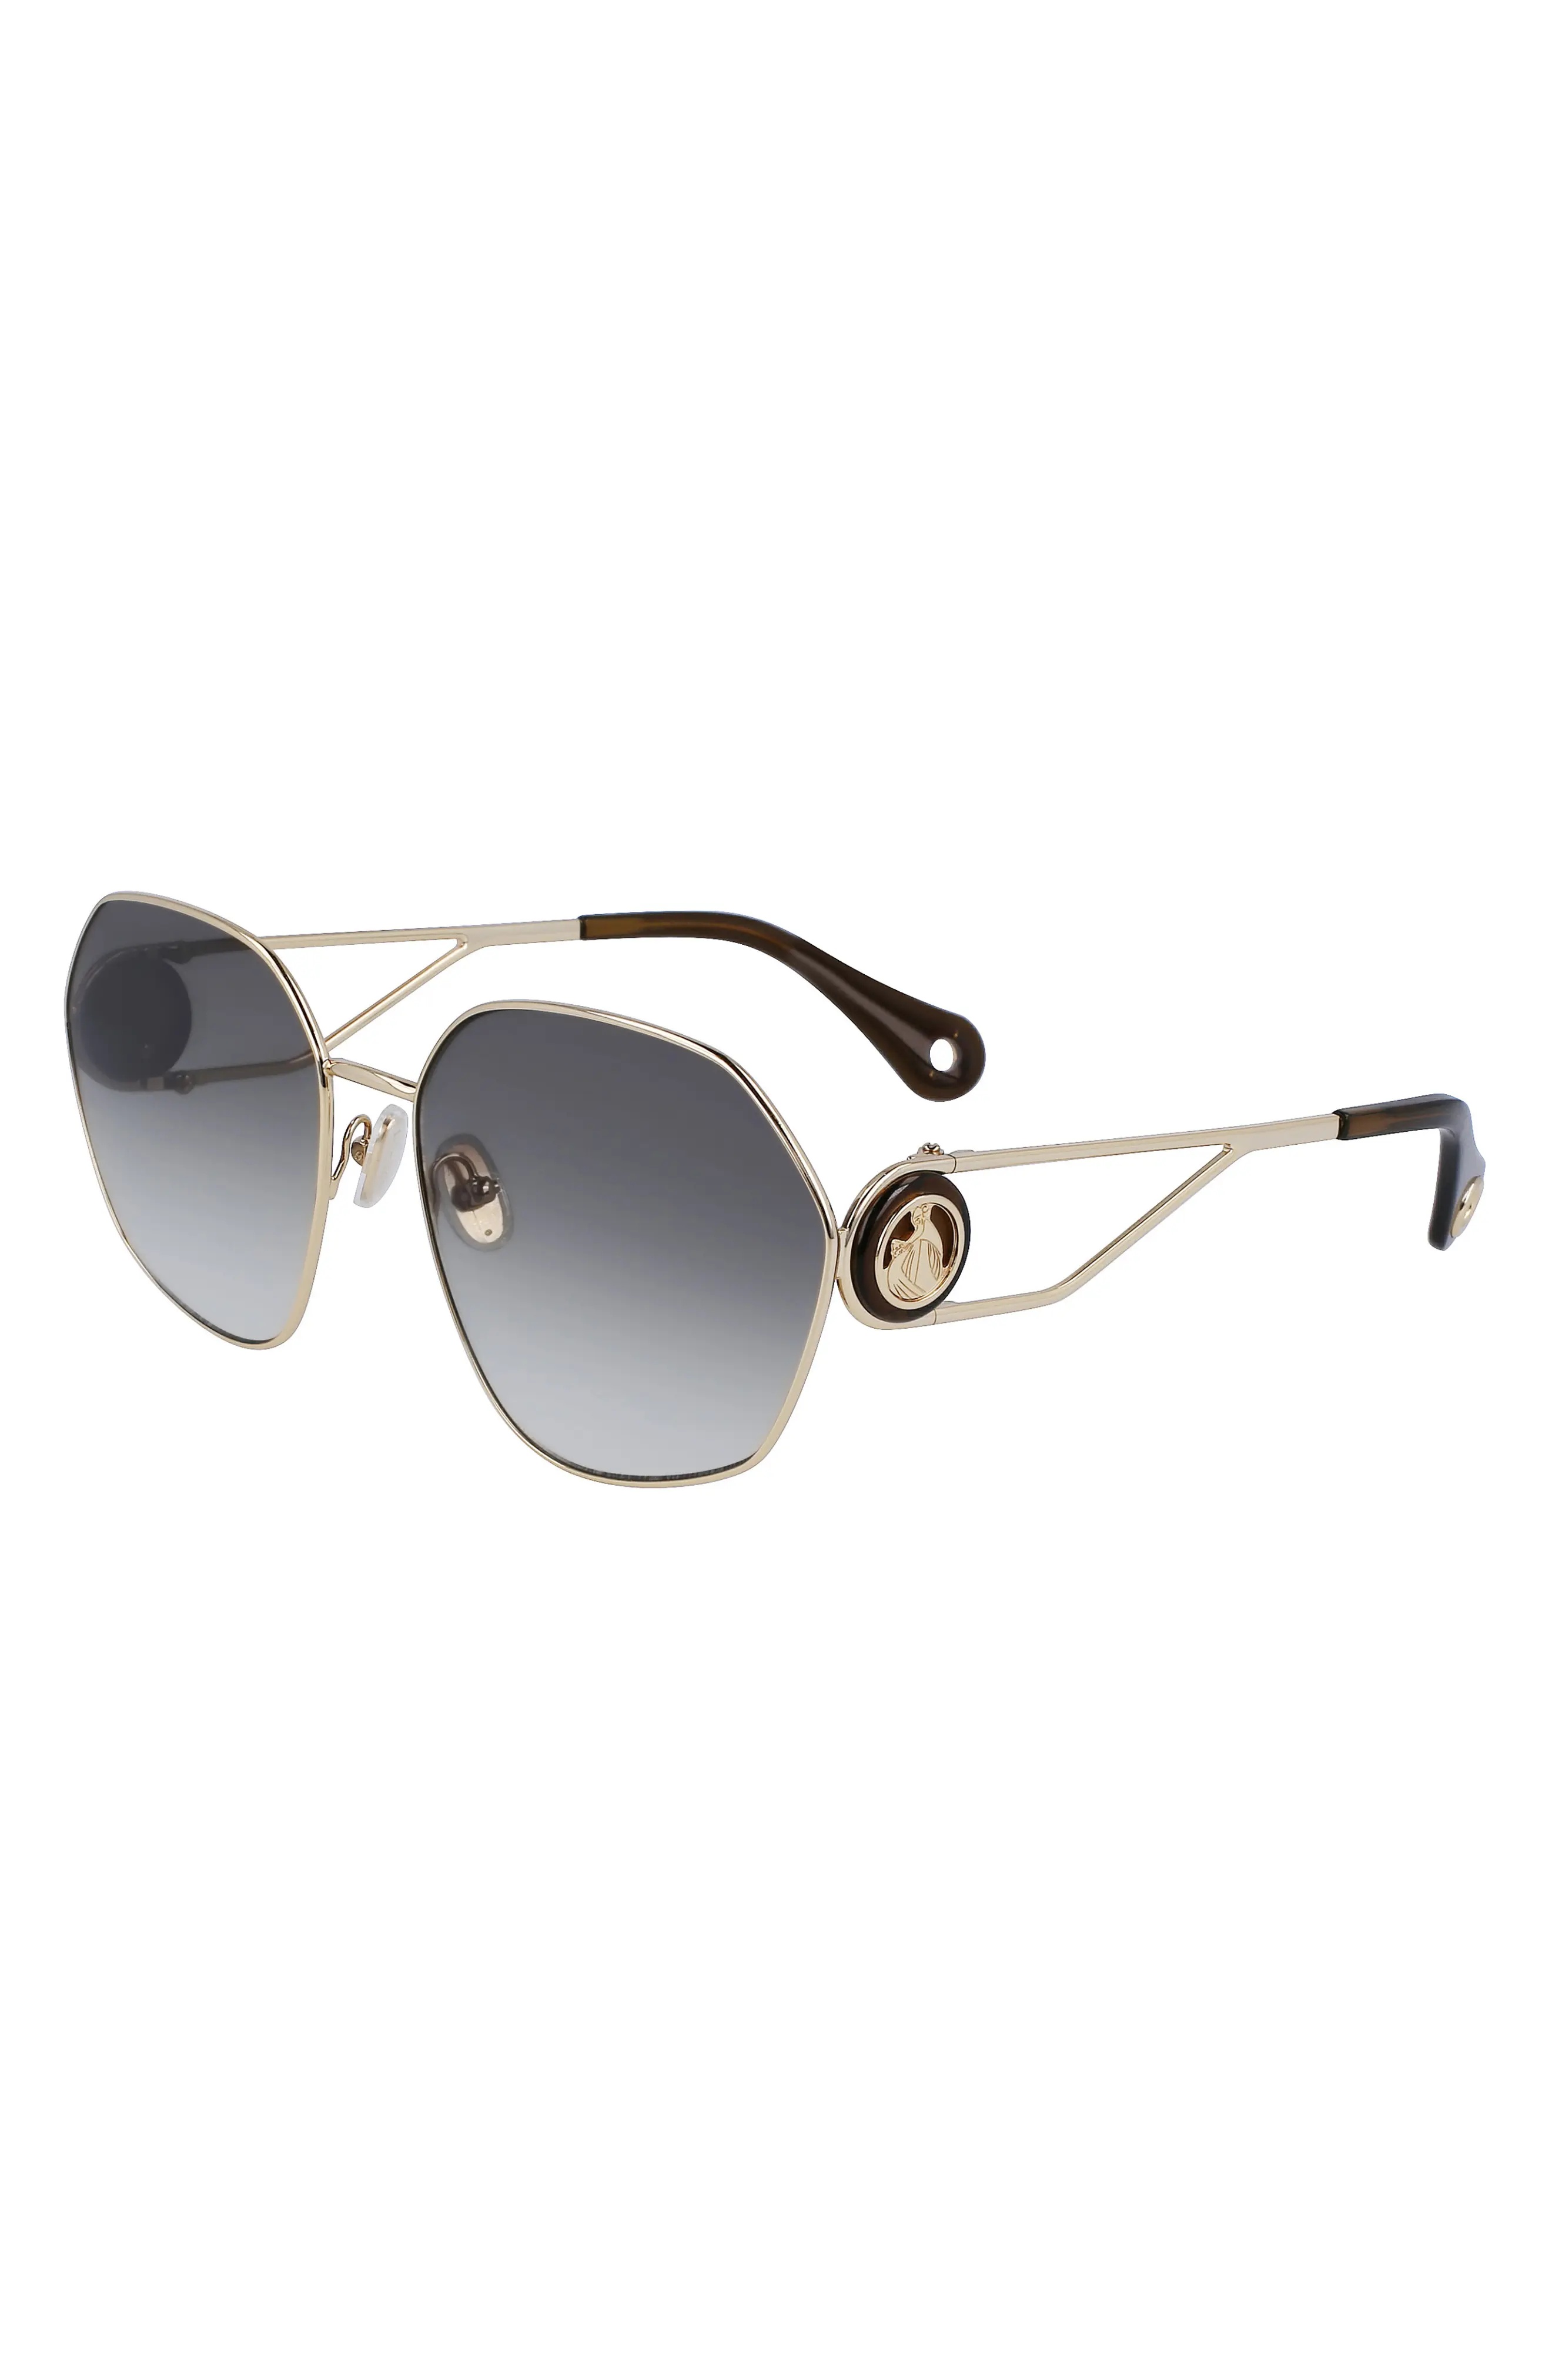 Mother & Child 62mm Oversize Rectangular Sunglasses in Gold/Gradient Khaki - 2